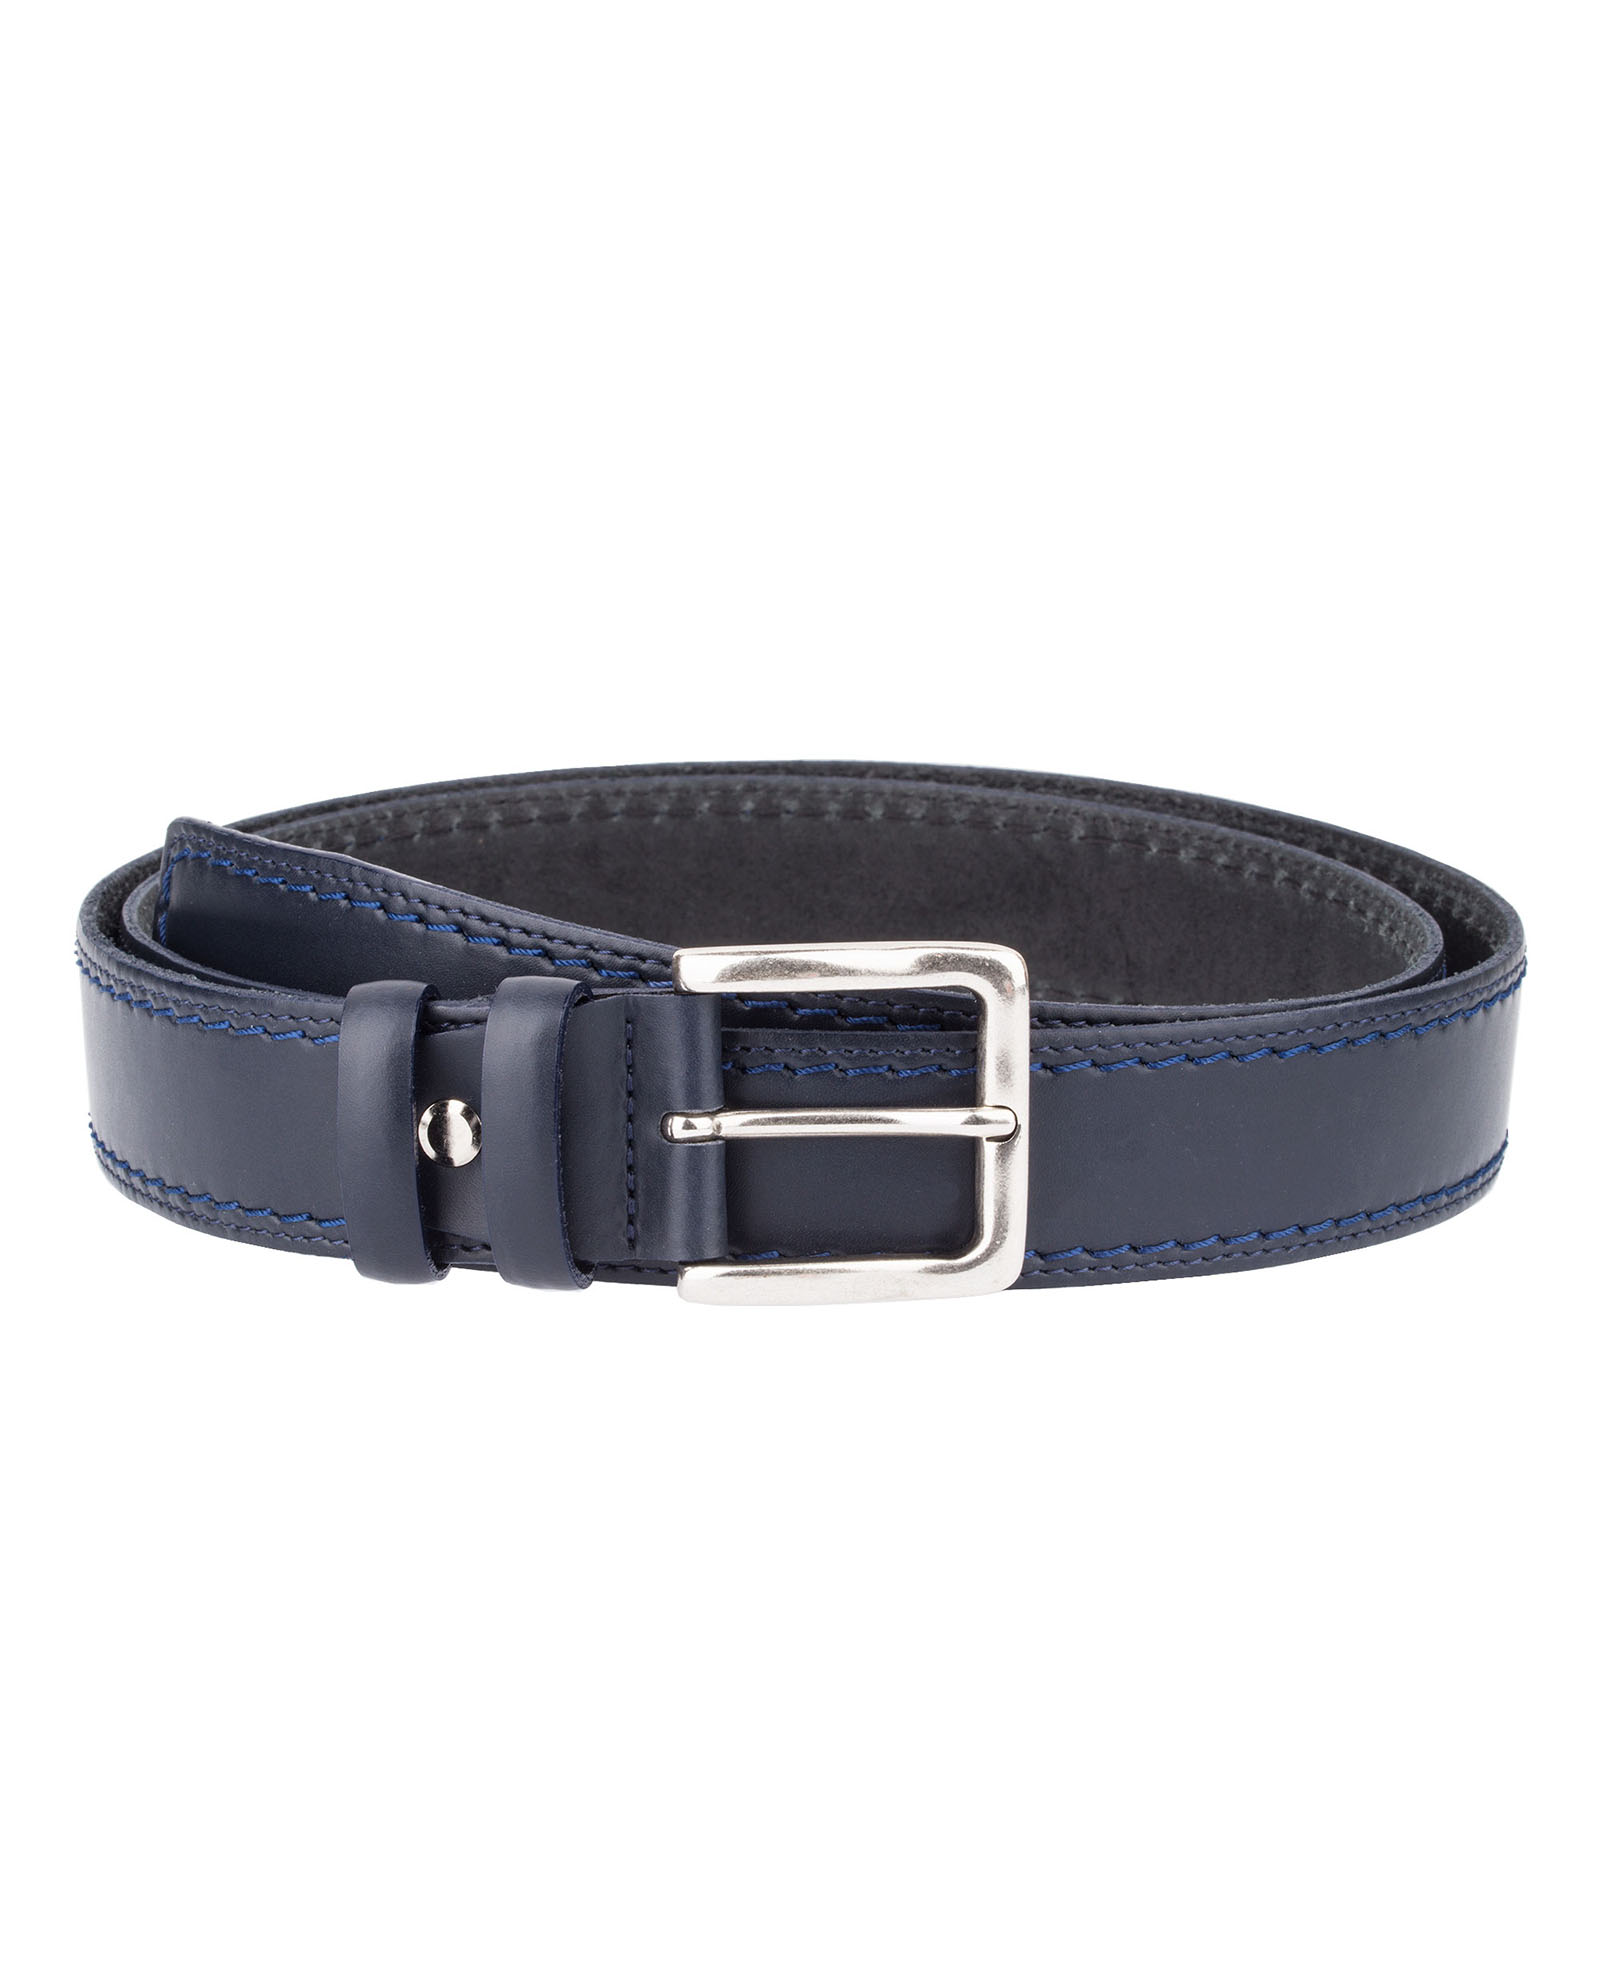 Buy Men's Italian Leather Belt - Dark Blue - LeatherBeltsOnline.com